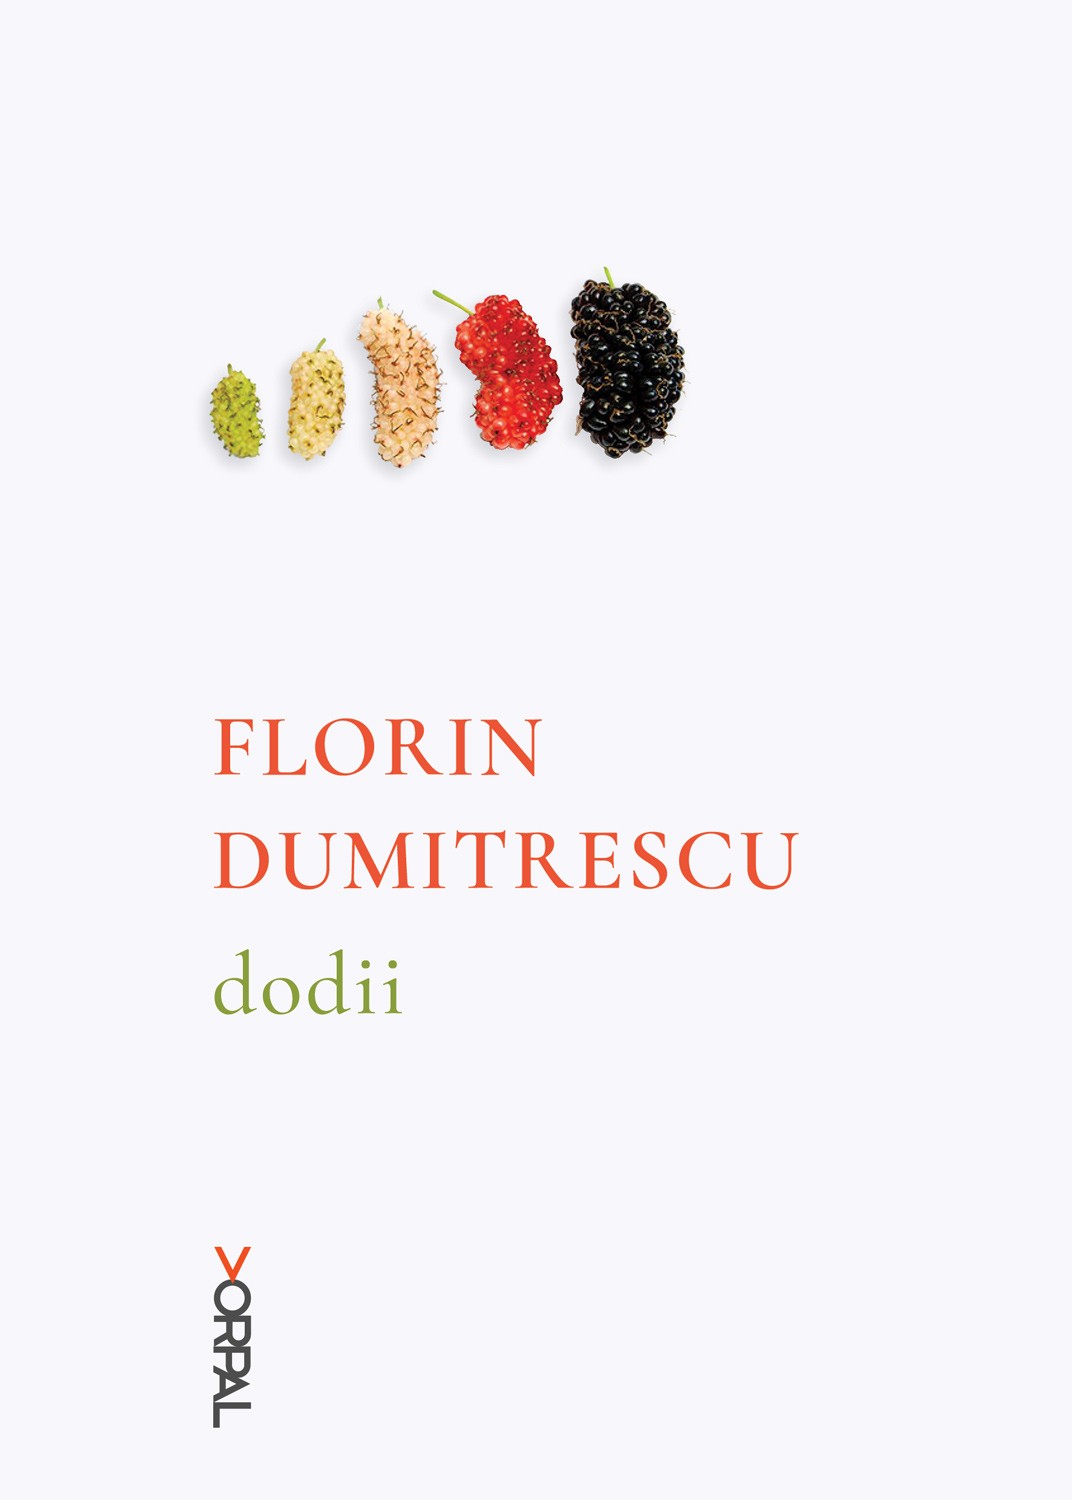 Dodii | Florin Dumitrescu